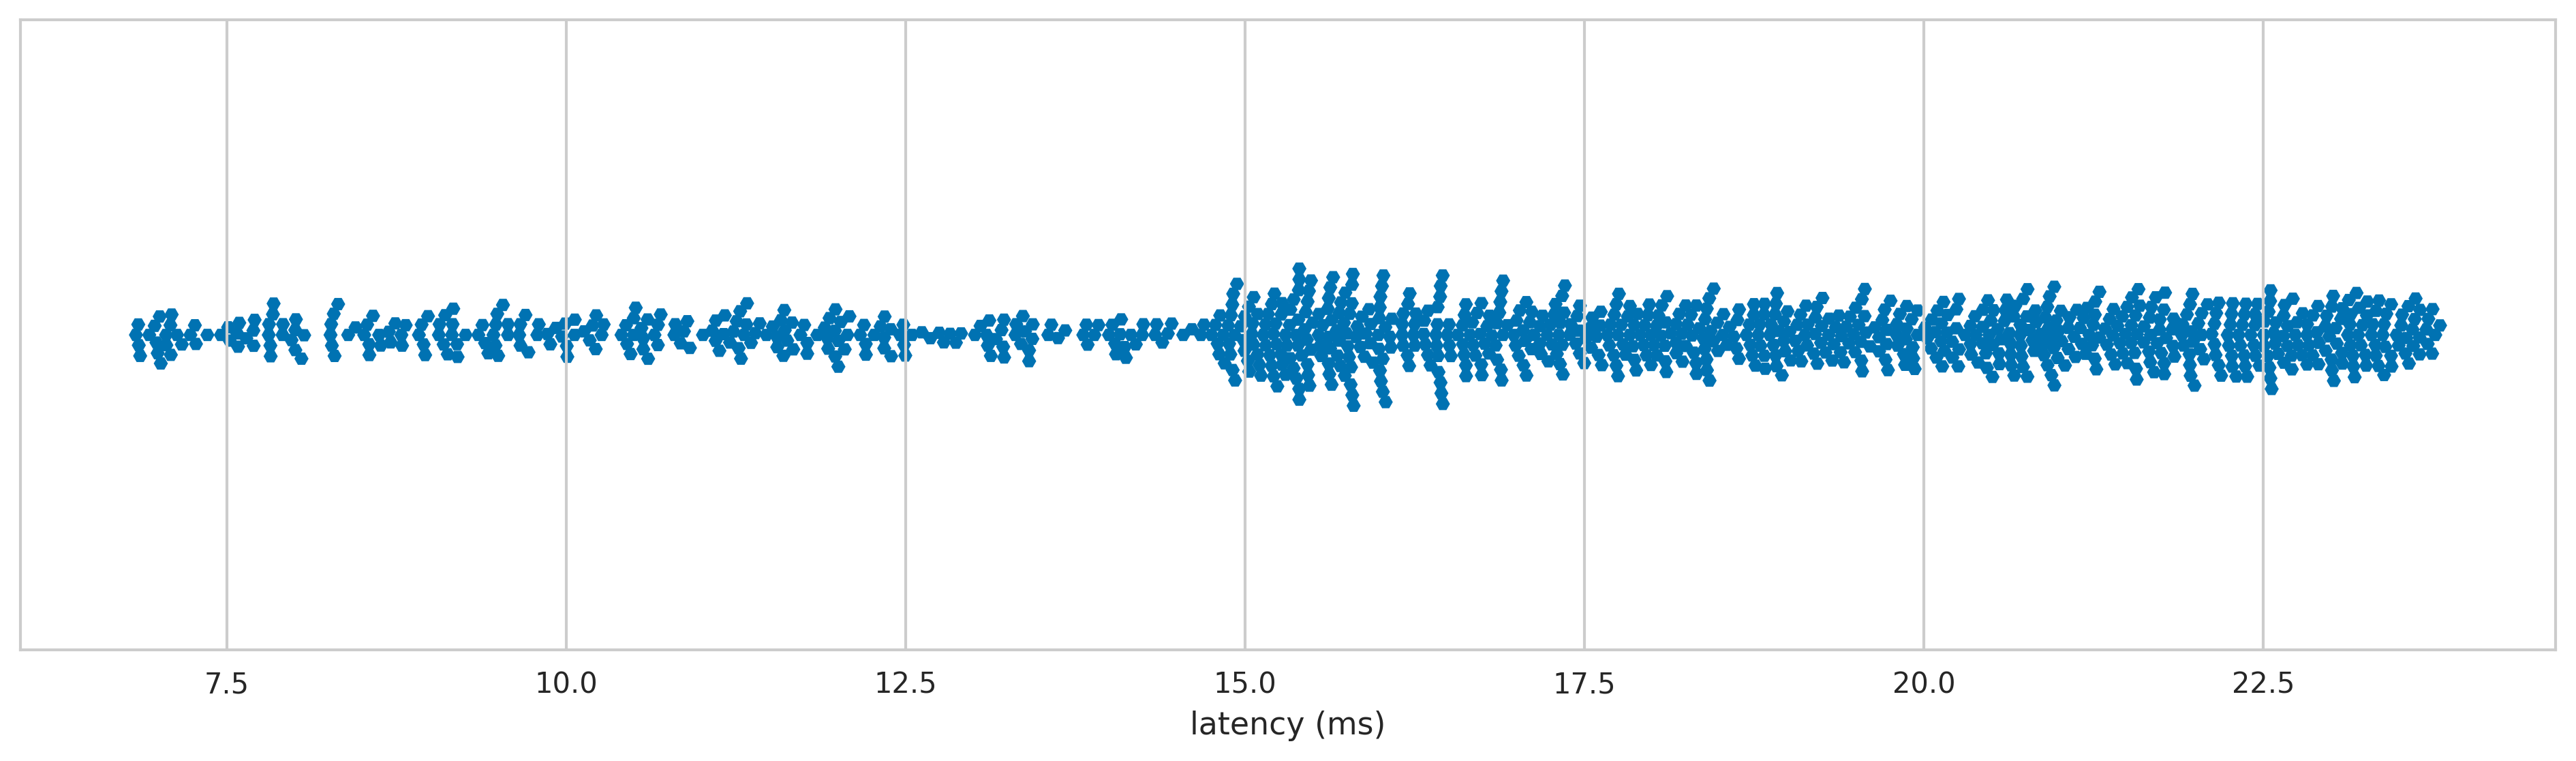 Speedlink Strike (Green) latency distribution 